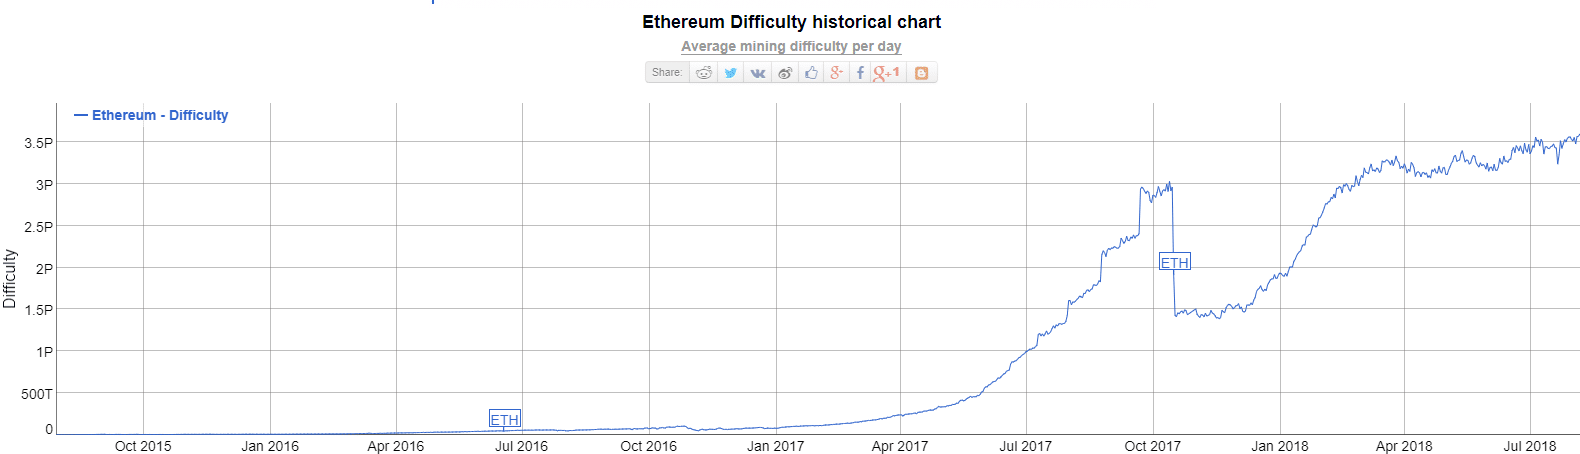 Ethereum Mining Difficulty via Bitinfocharts